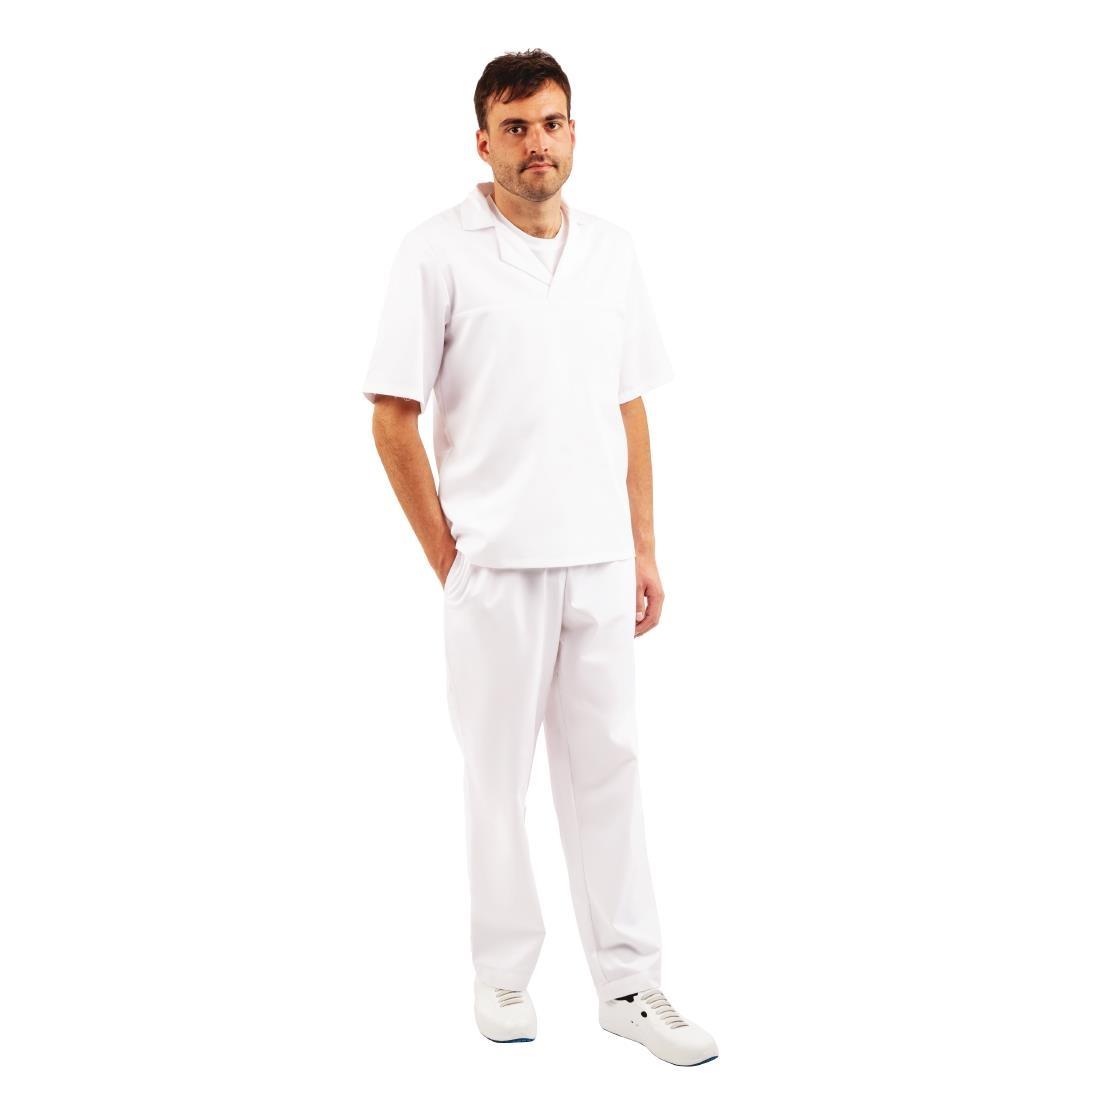 Unisex Bakers Shirt White XL - A102-XL  - 2